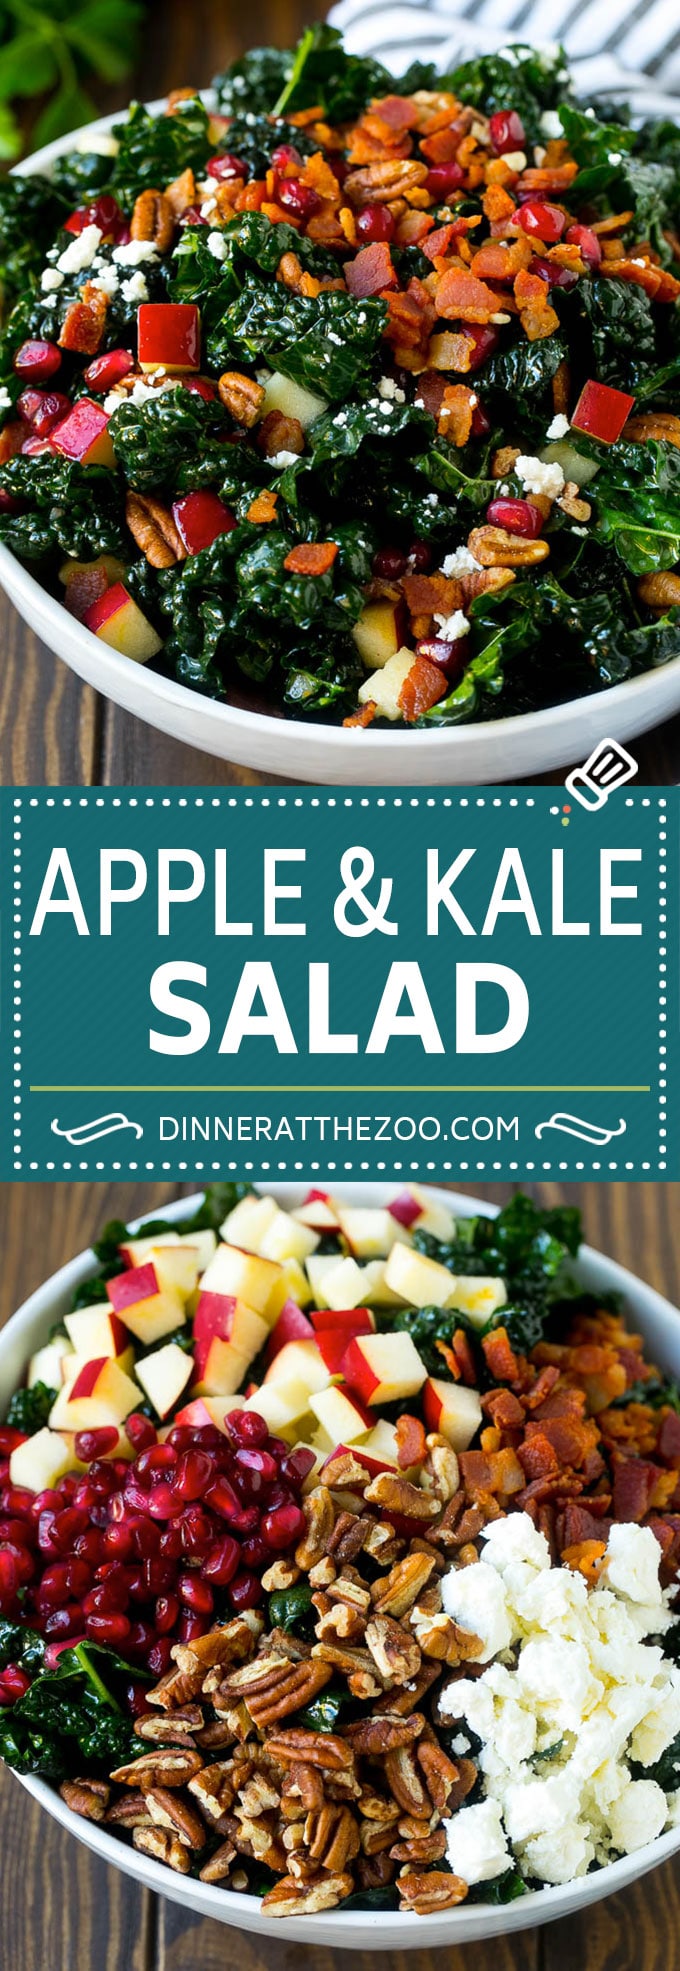 Apple Kale Salad Recipe | Kale Recipe | Fall Salad #kale #apples #bacon #salad #feta #dinner #lunch #dinneratthezoo